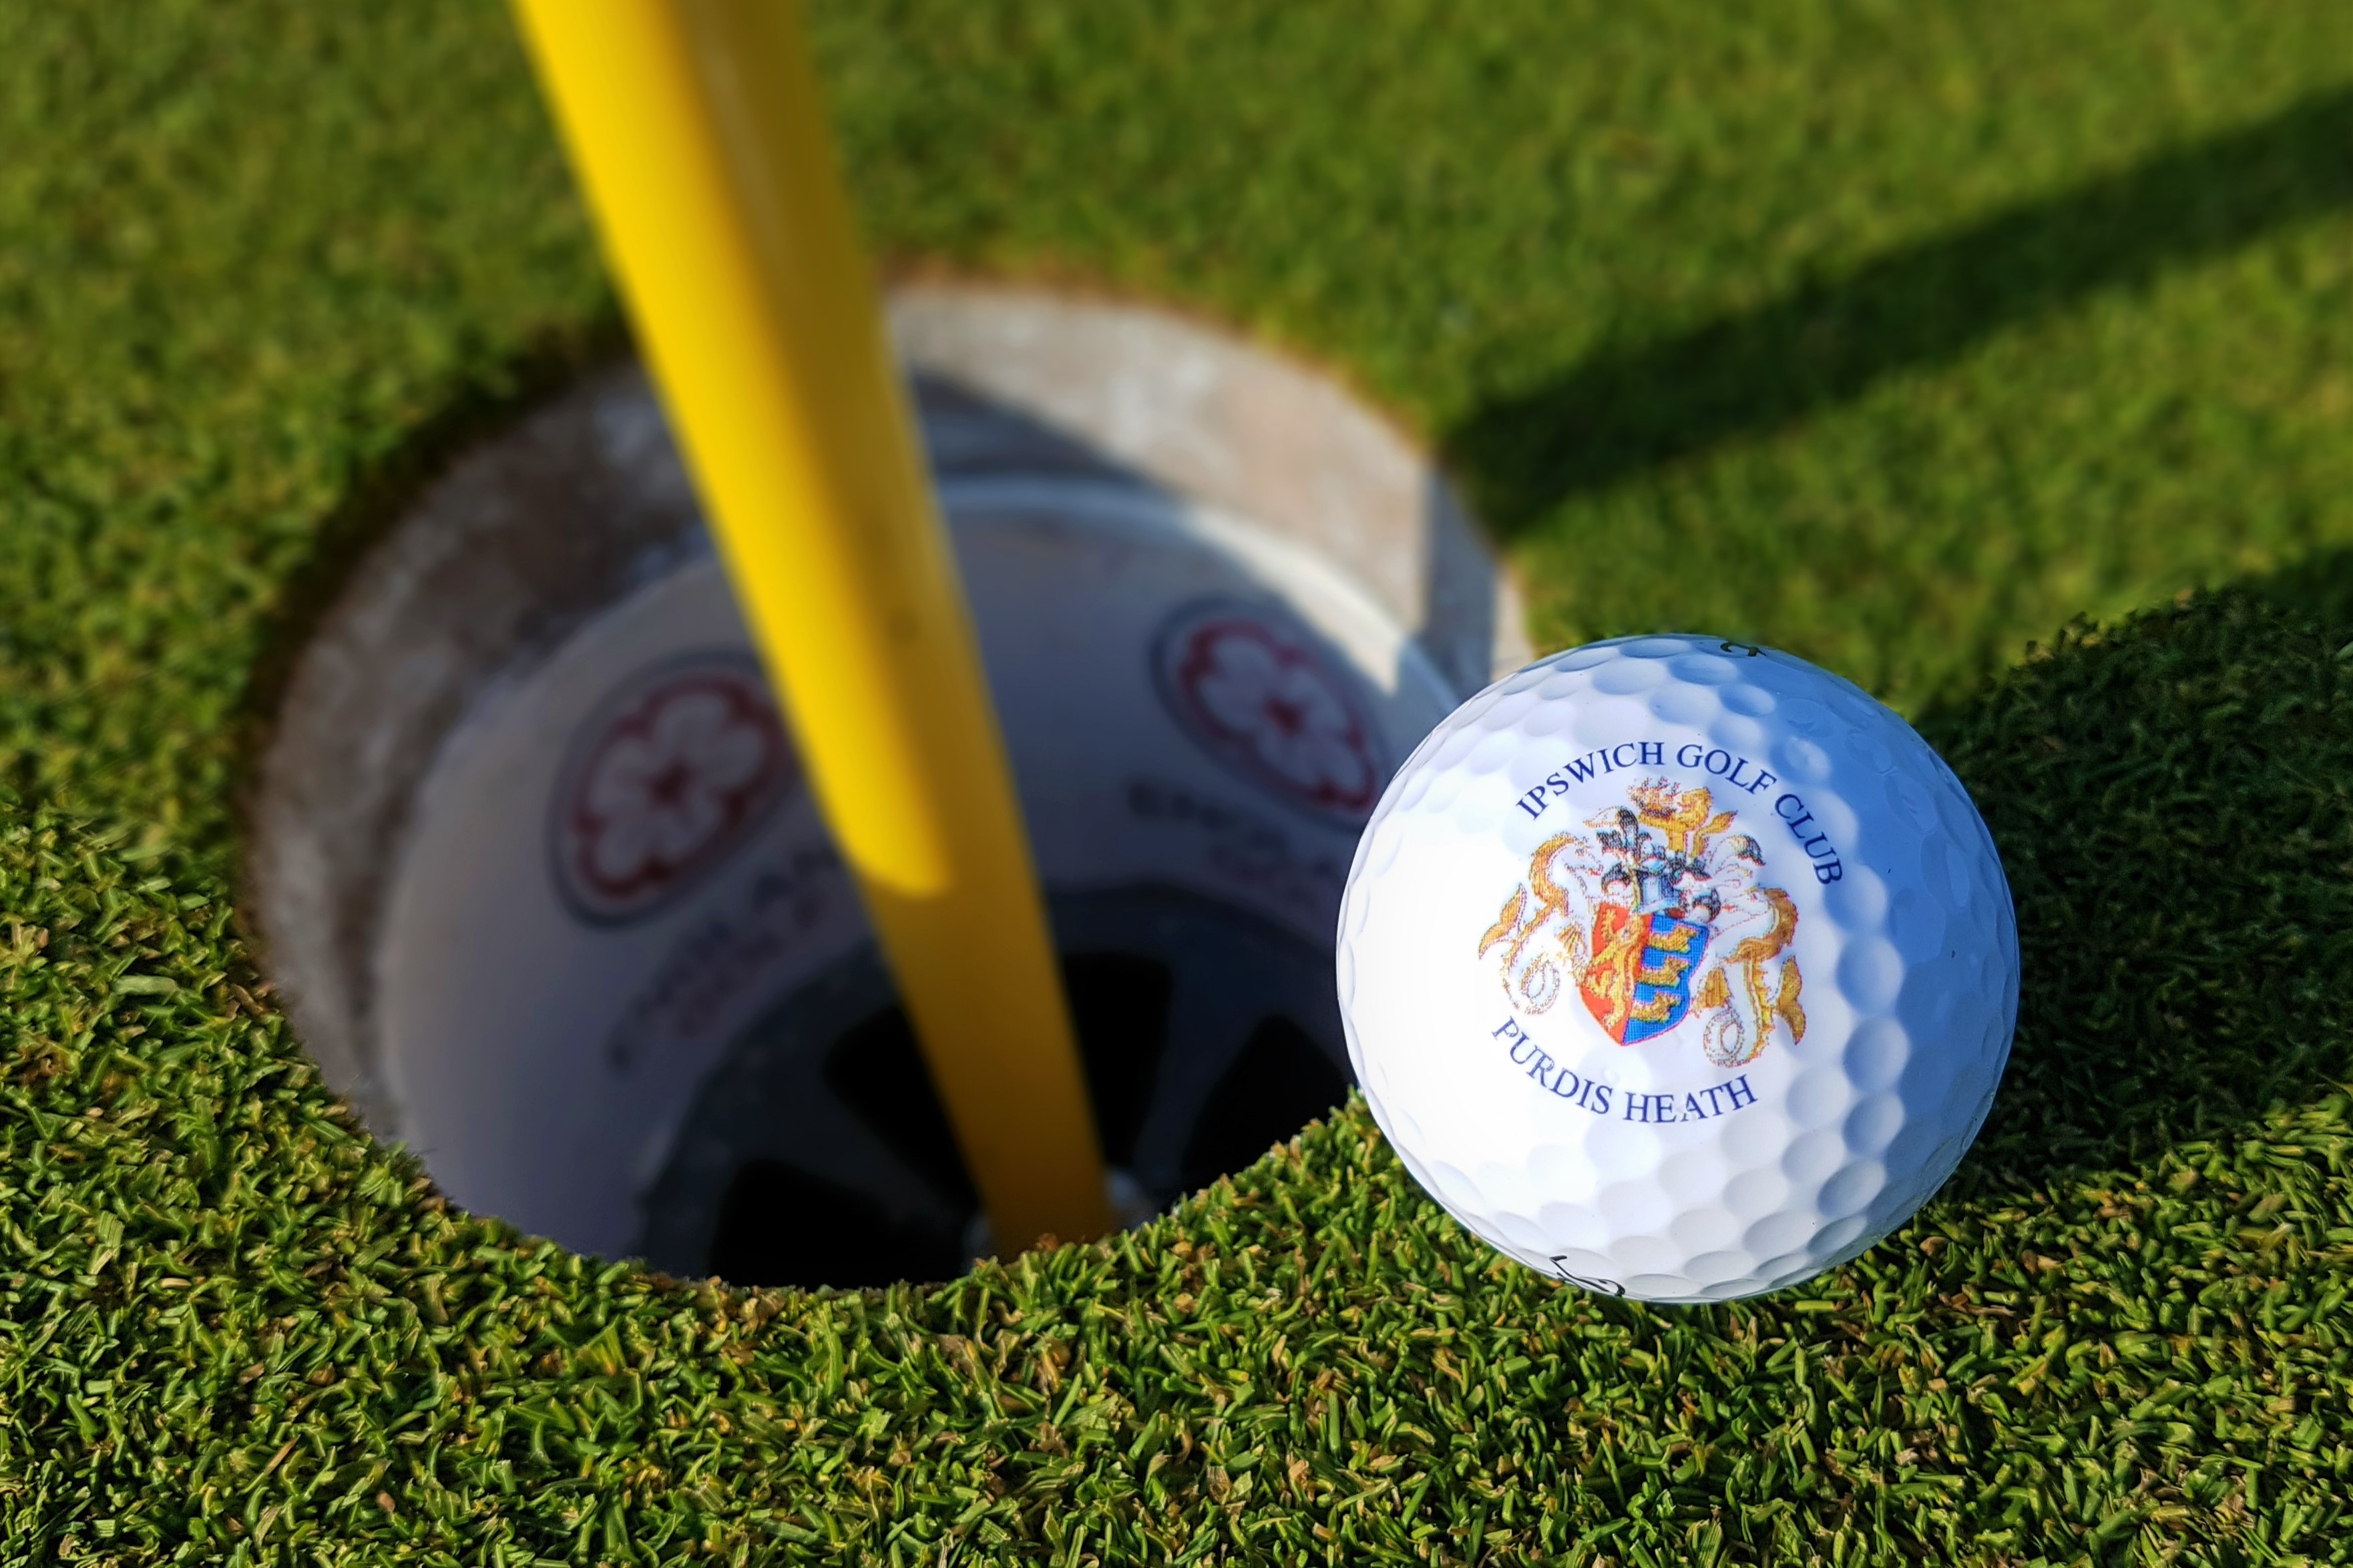 Meet the Staff - Ipswich Golf Club